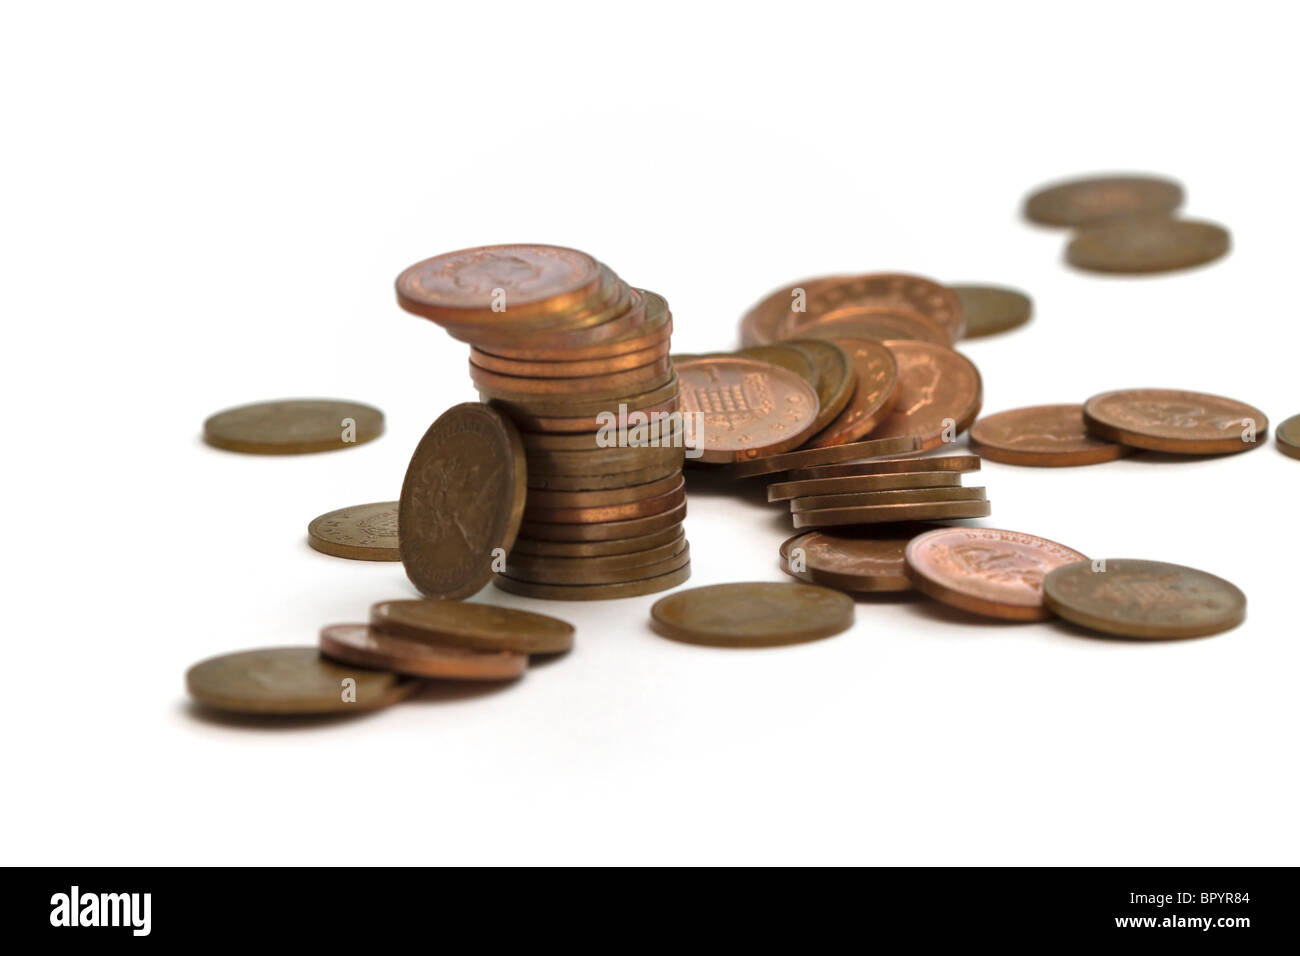 Fallen stack of pennies Stock Photo